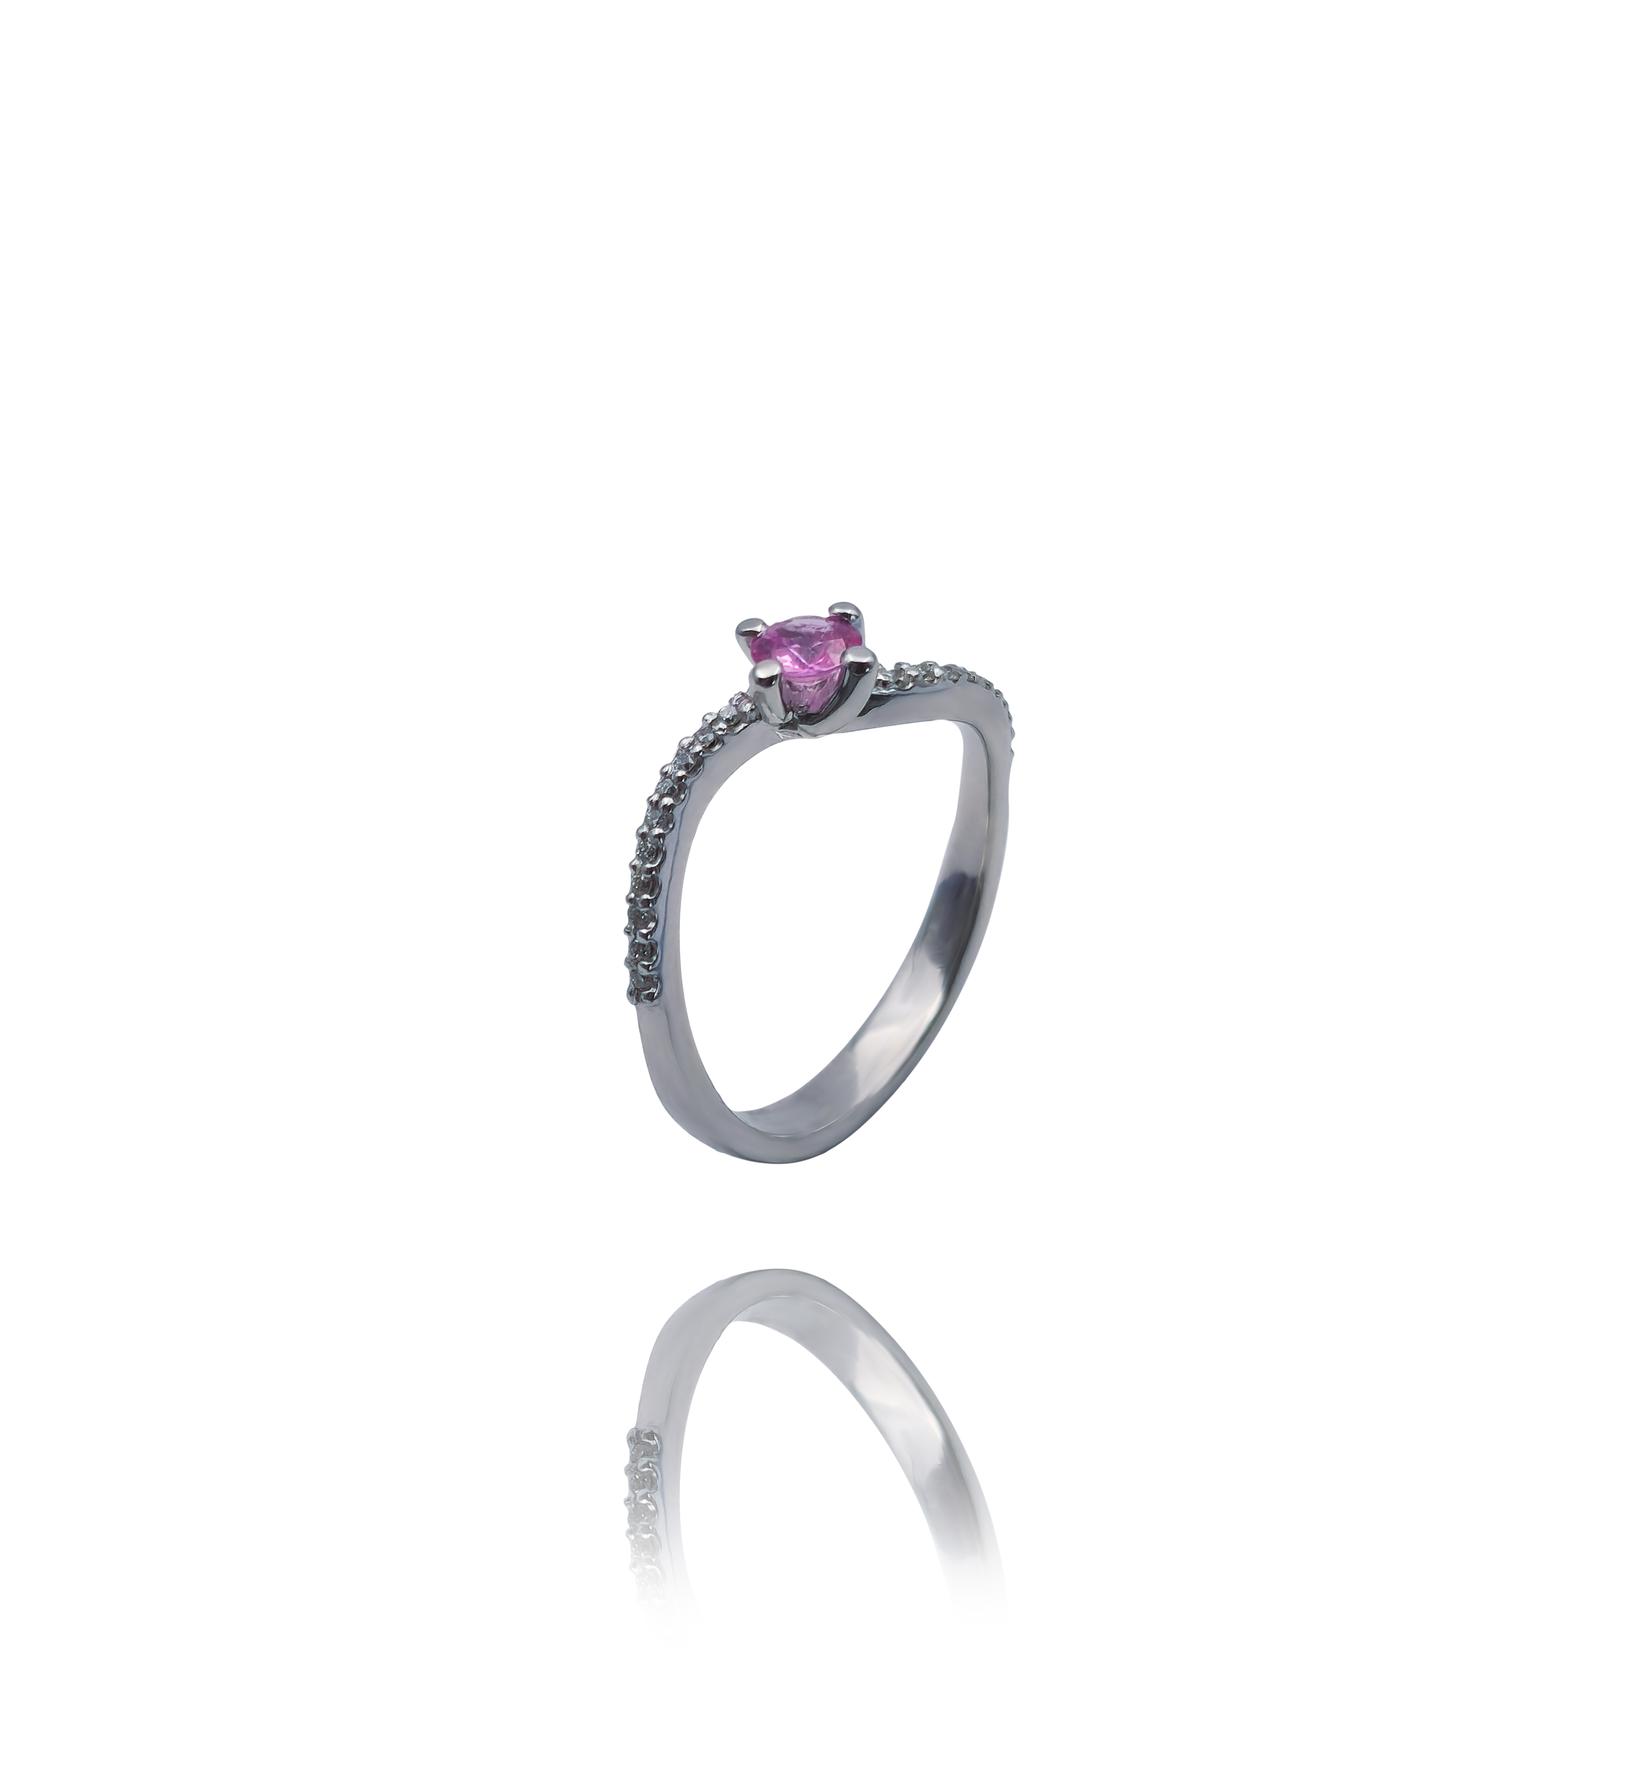 Selected image for Ženski prsten od Belog zlata sa Brilijantima I Pink safirom 585, 17mm